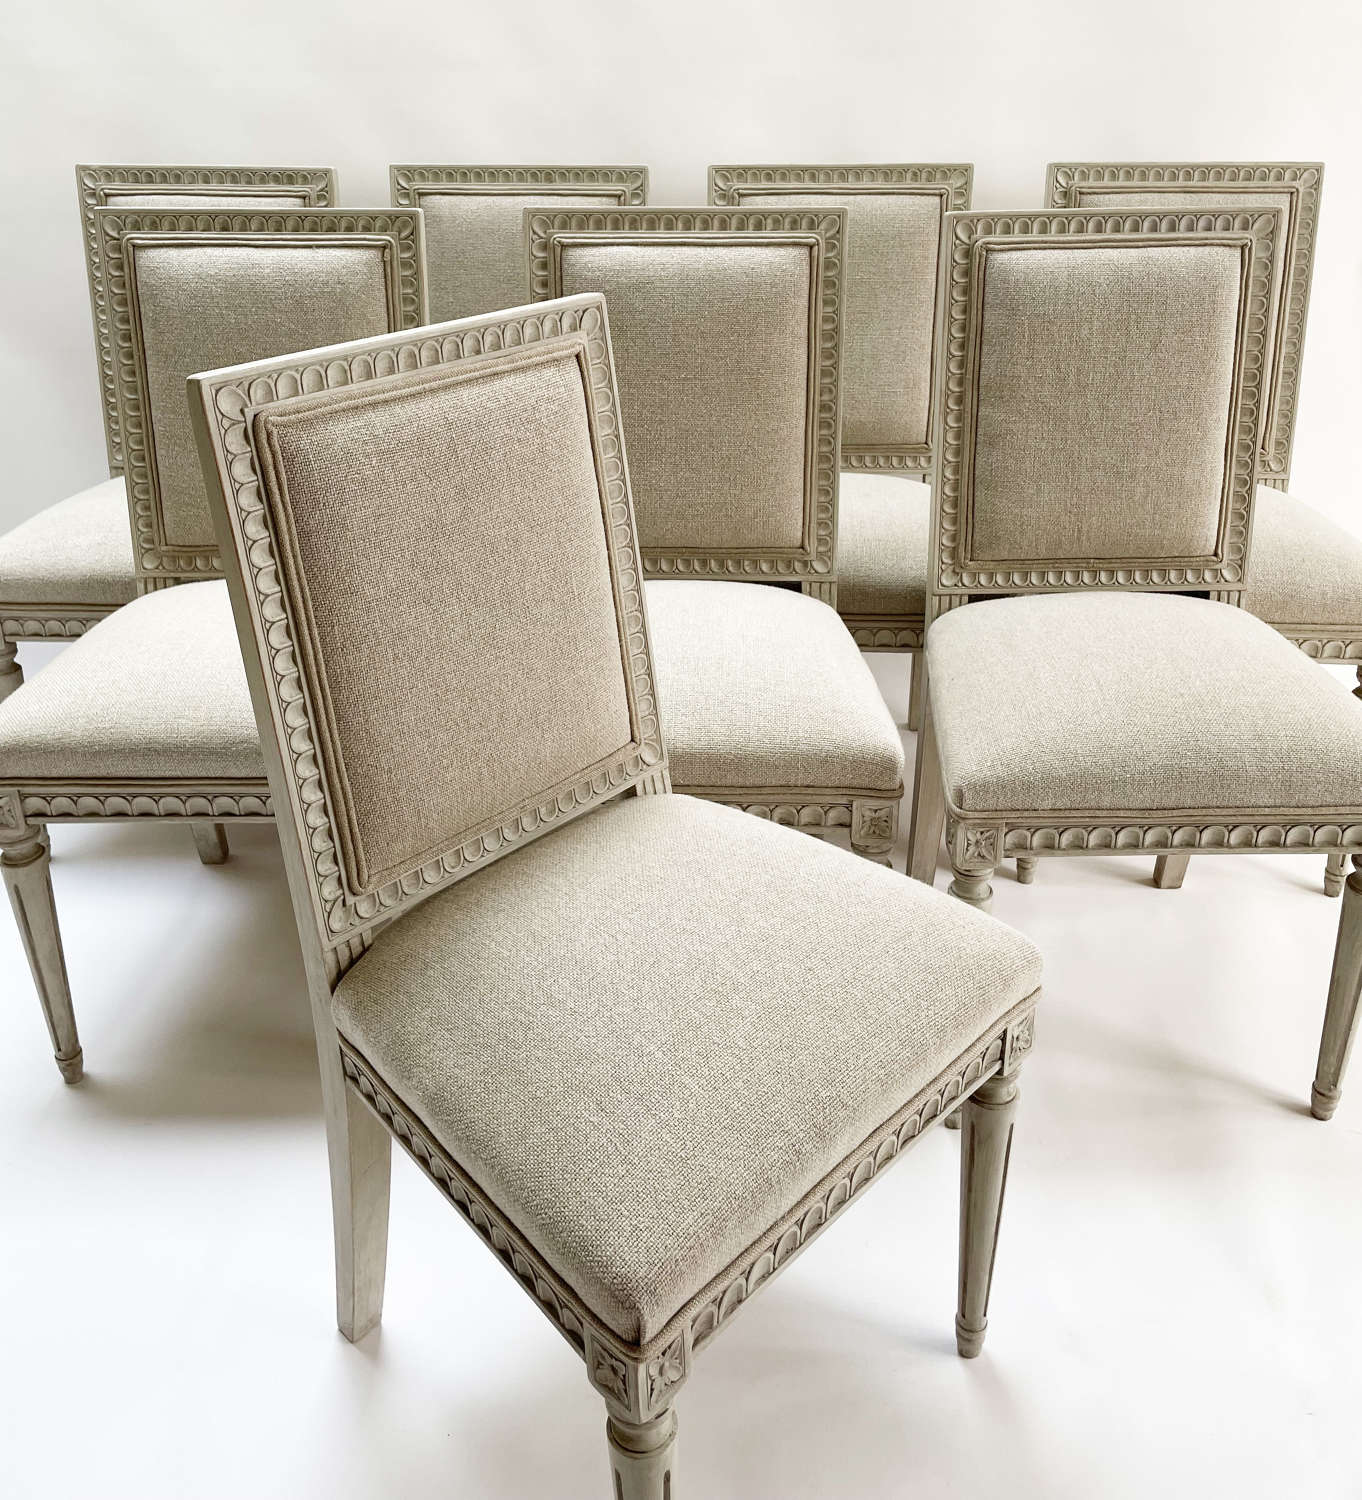 Set 8 19th c Swedish Upholstered Dining Chairs - circa 1880